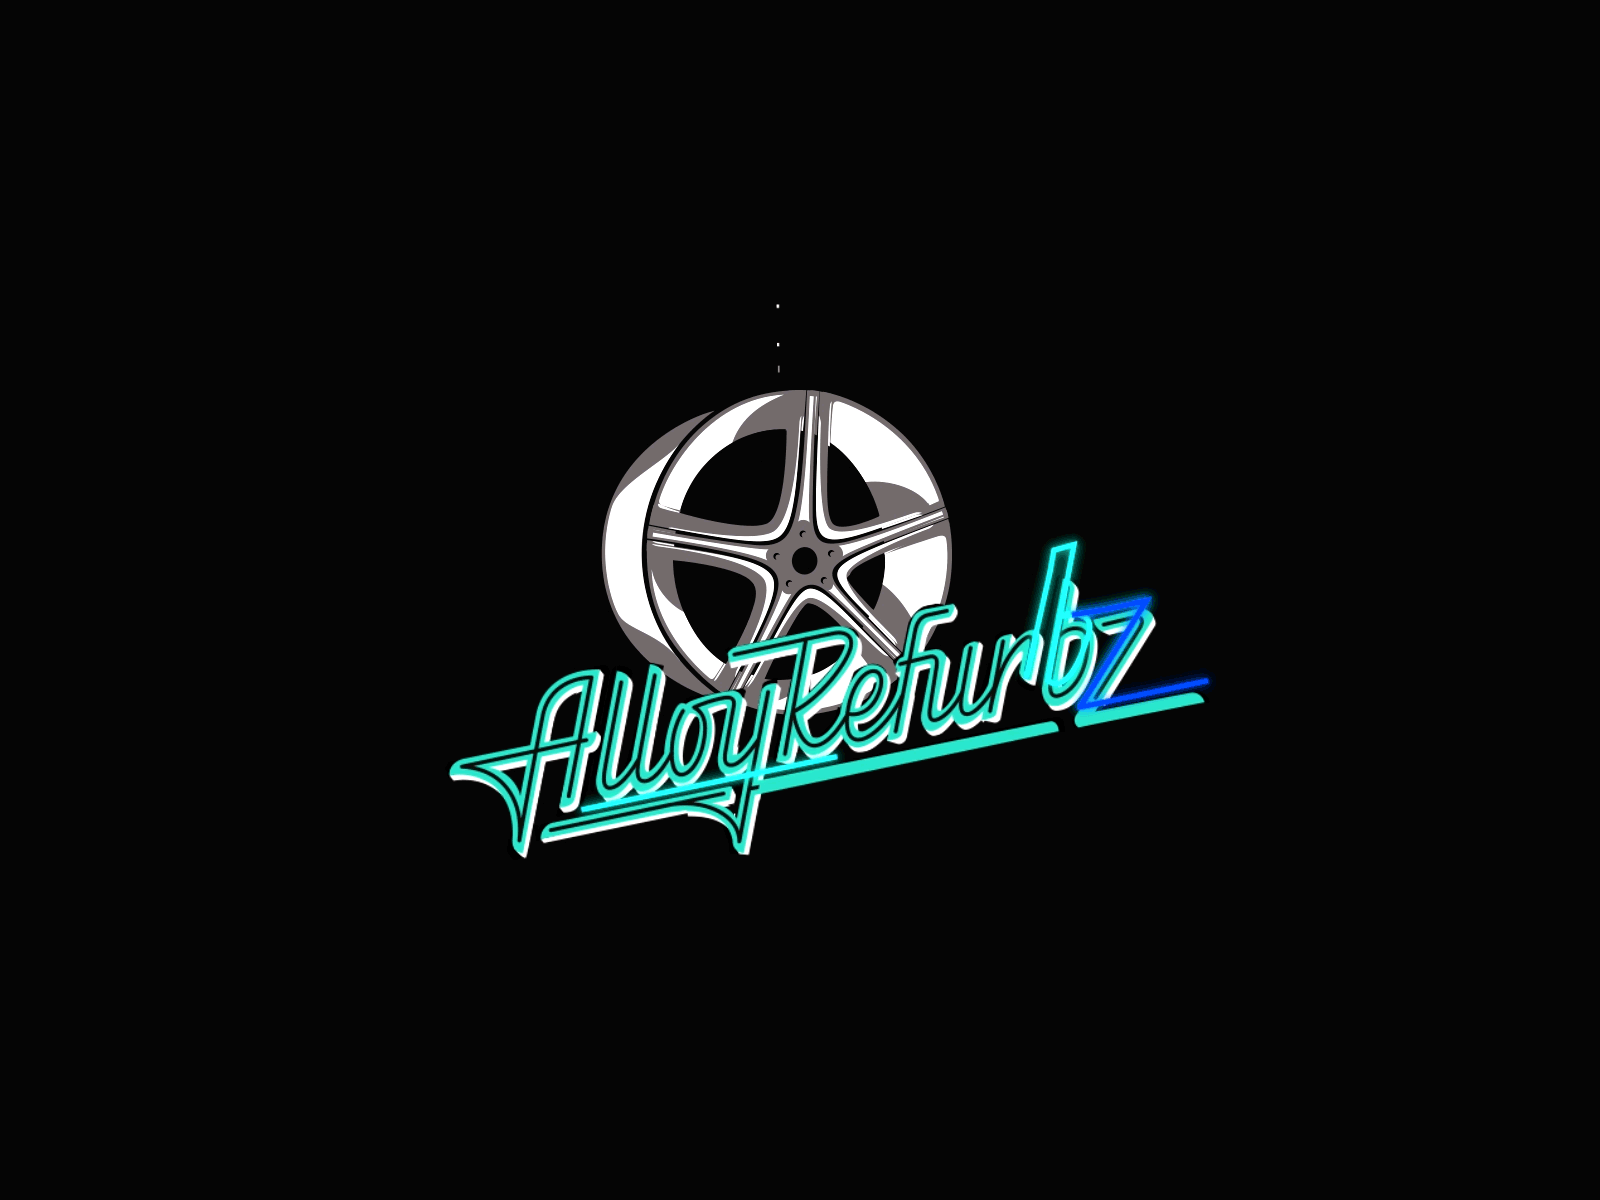 Alloy Refurbz logo animation